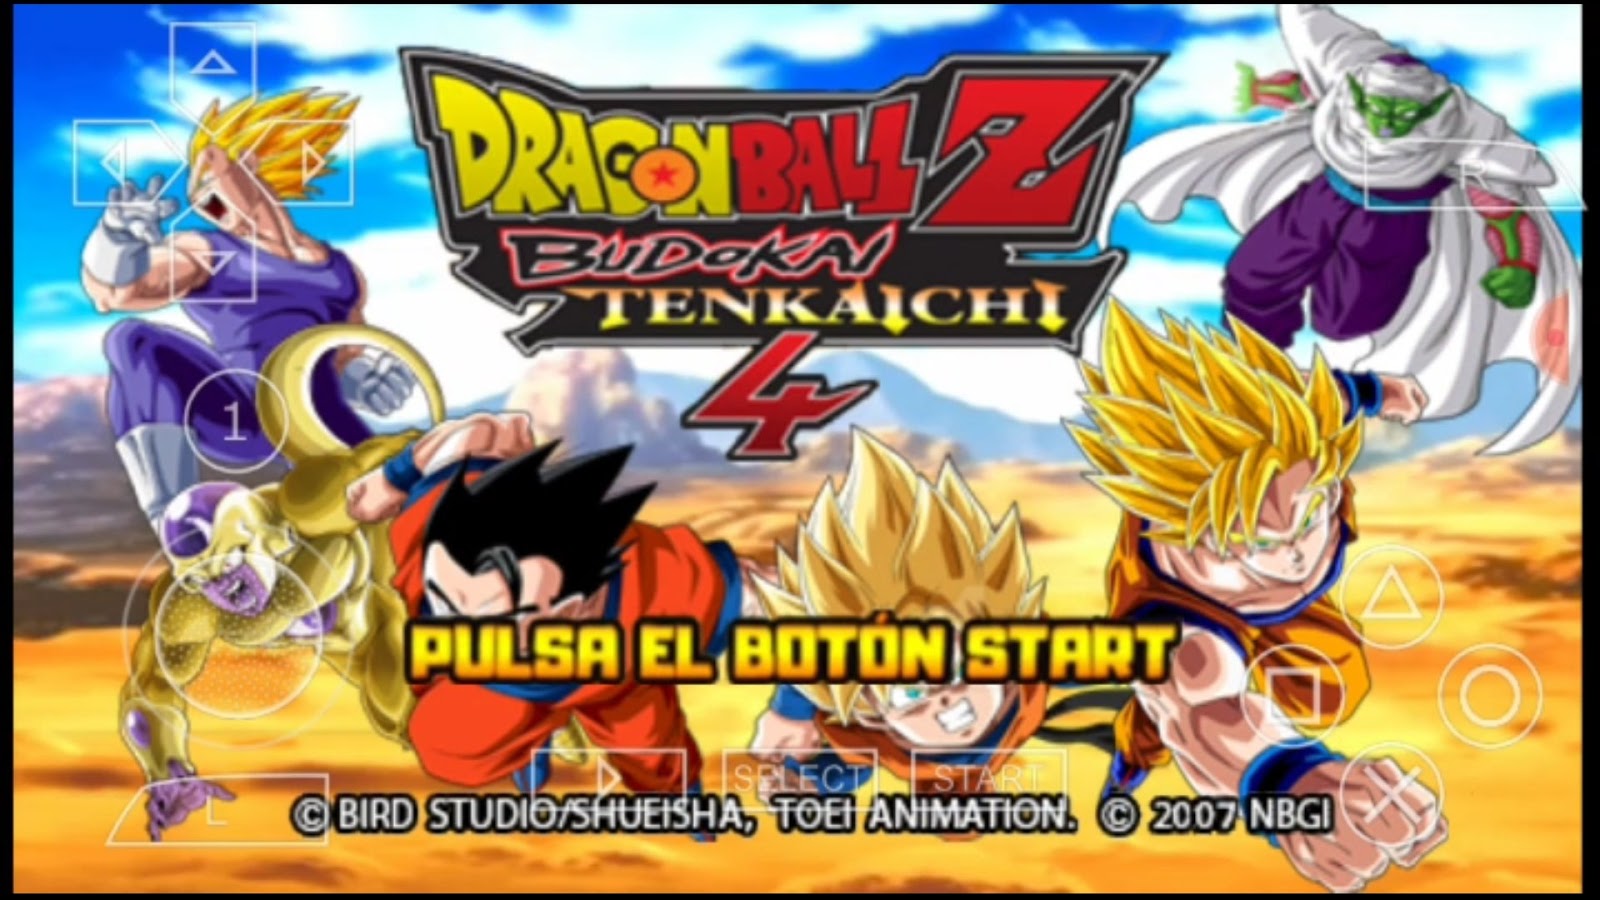 Mod Dragon Ball Z Tenkaichi Tag Team Super Hero BT4 V2 PSP